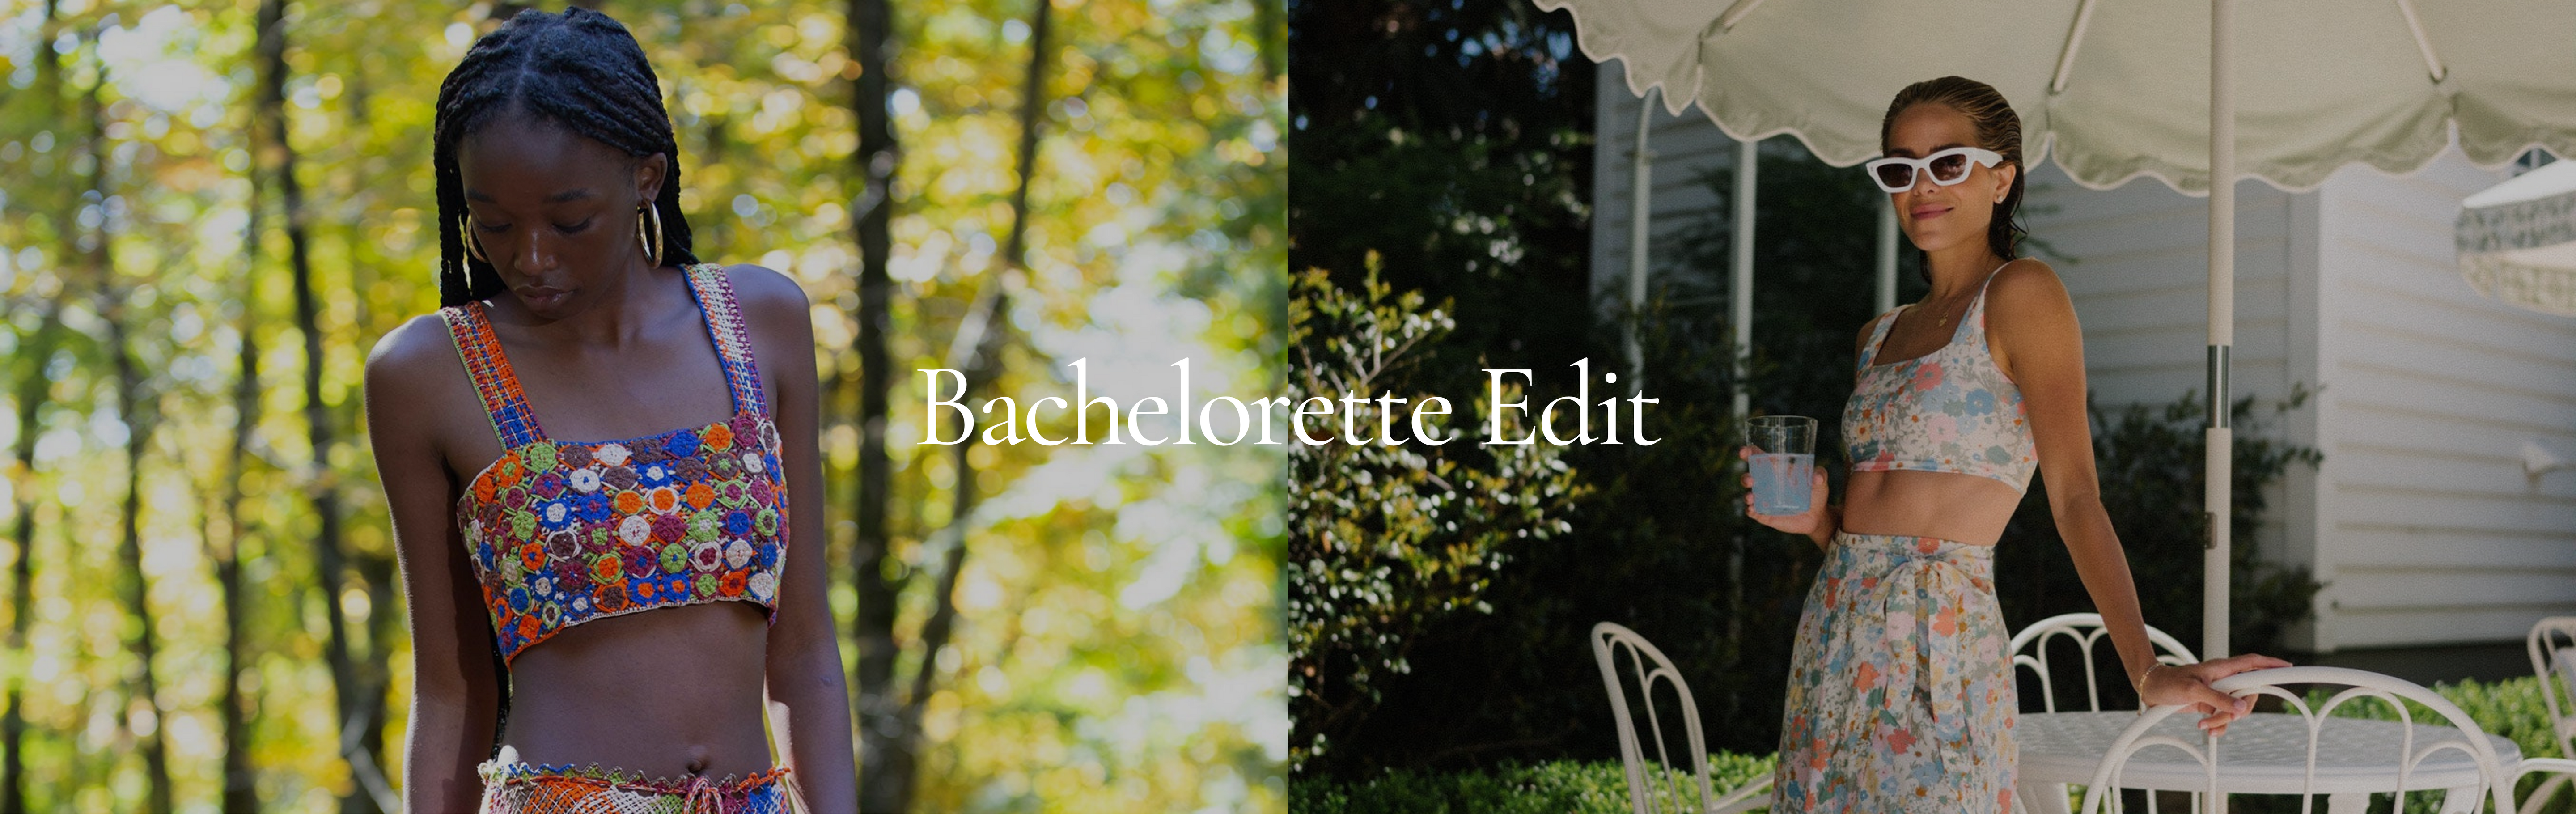 Bachelorette Edit